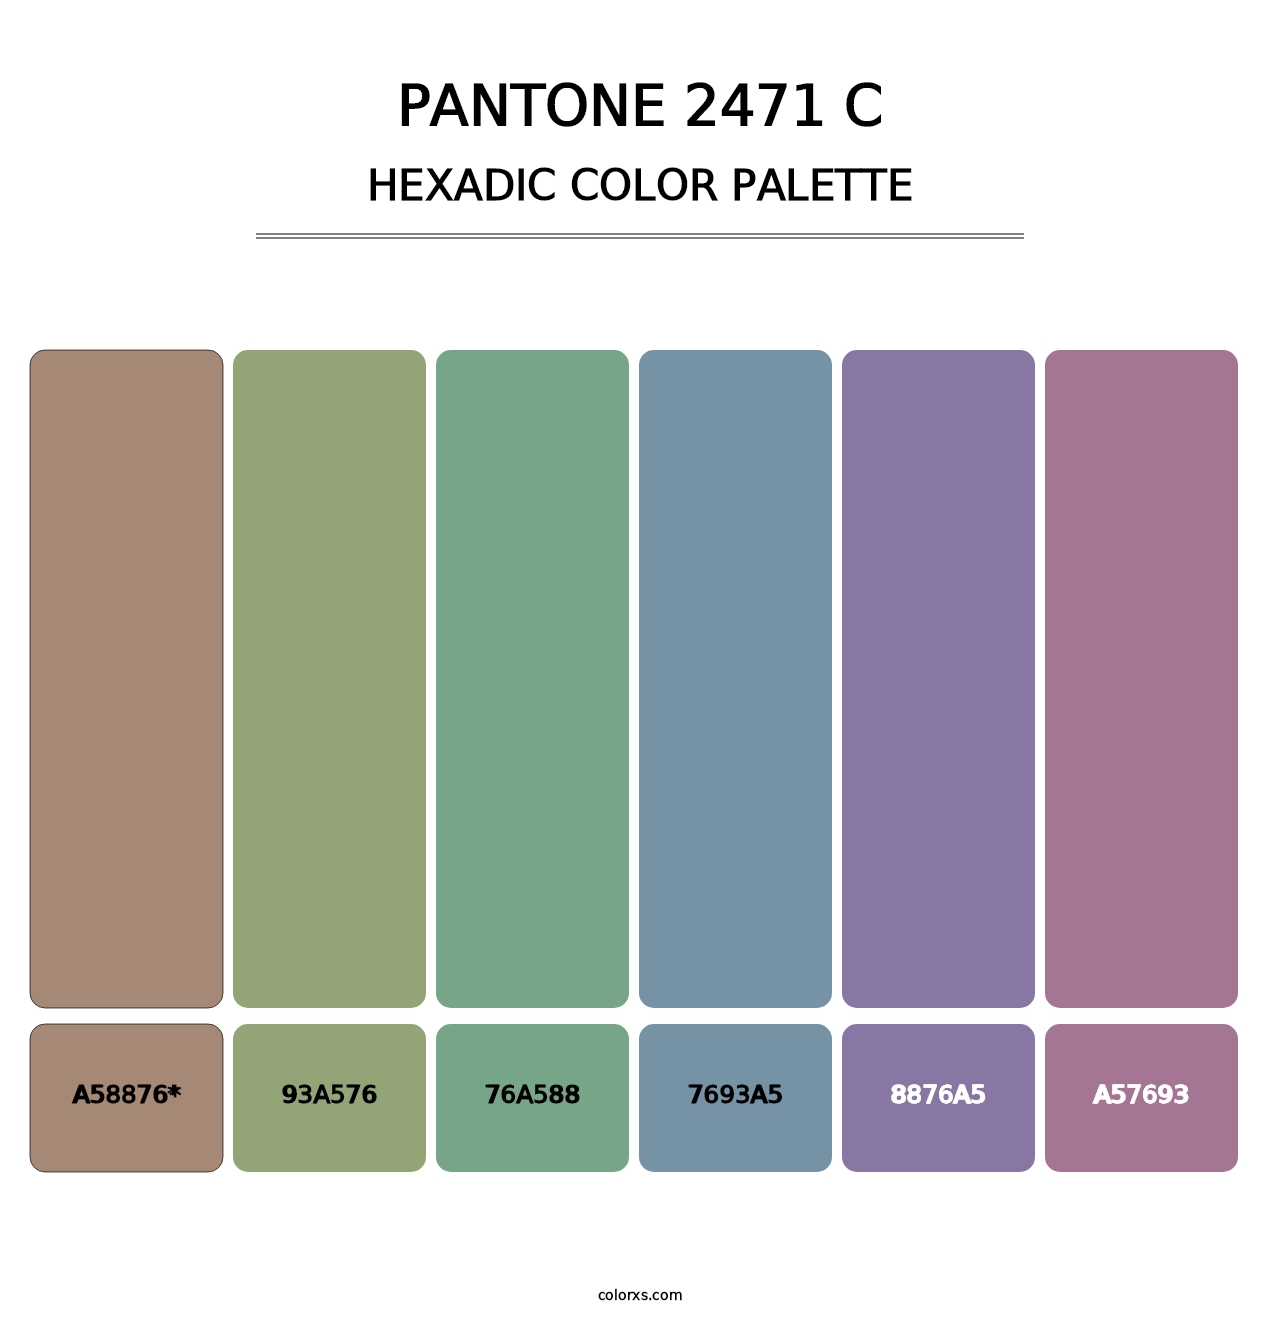 PANTONE 2471 C - Hexadic Color Palette